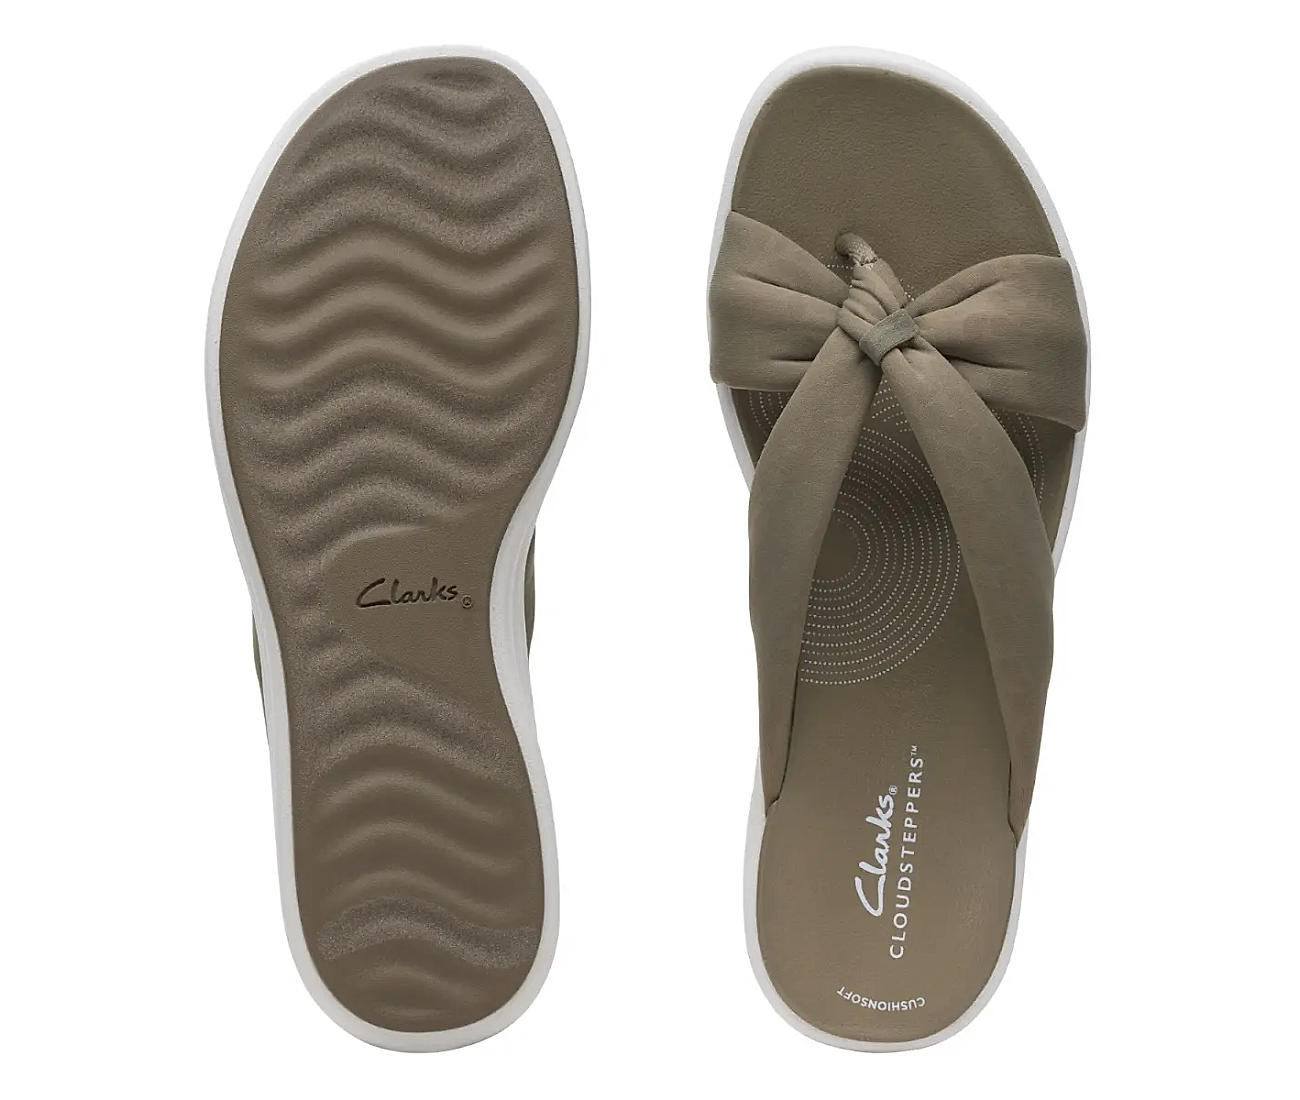 NWOT - Clark's Beige Leather Sandals - Size 8 | Strap heels, Women shoes,  Leather sandals